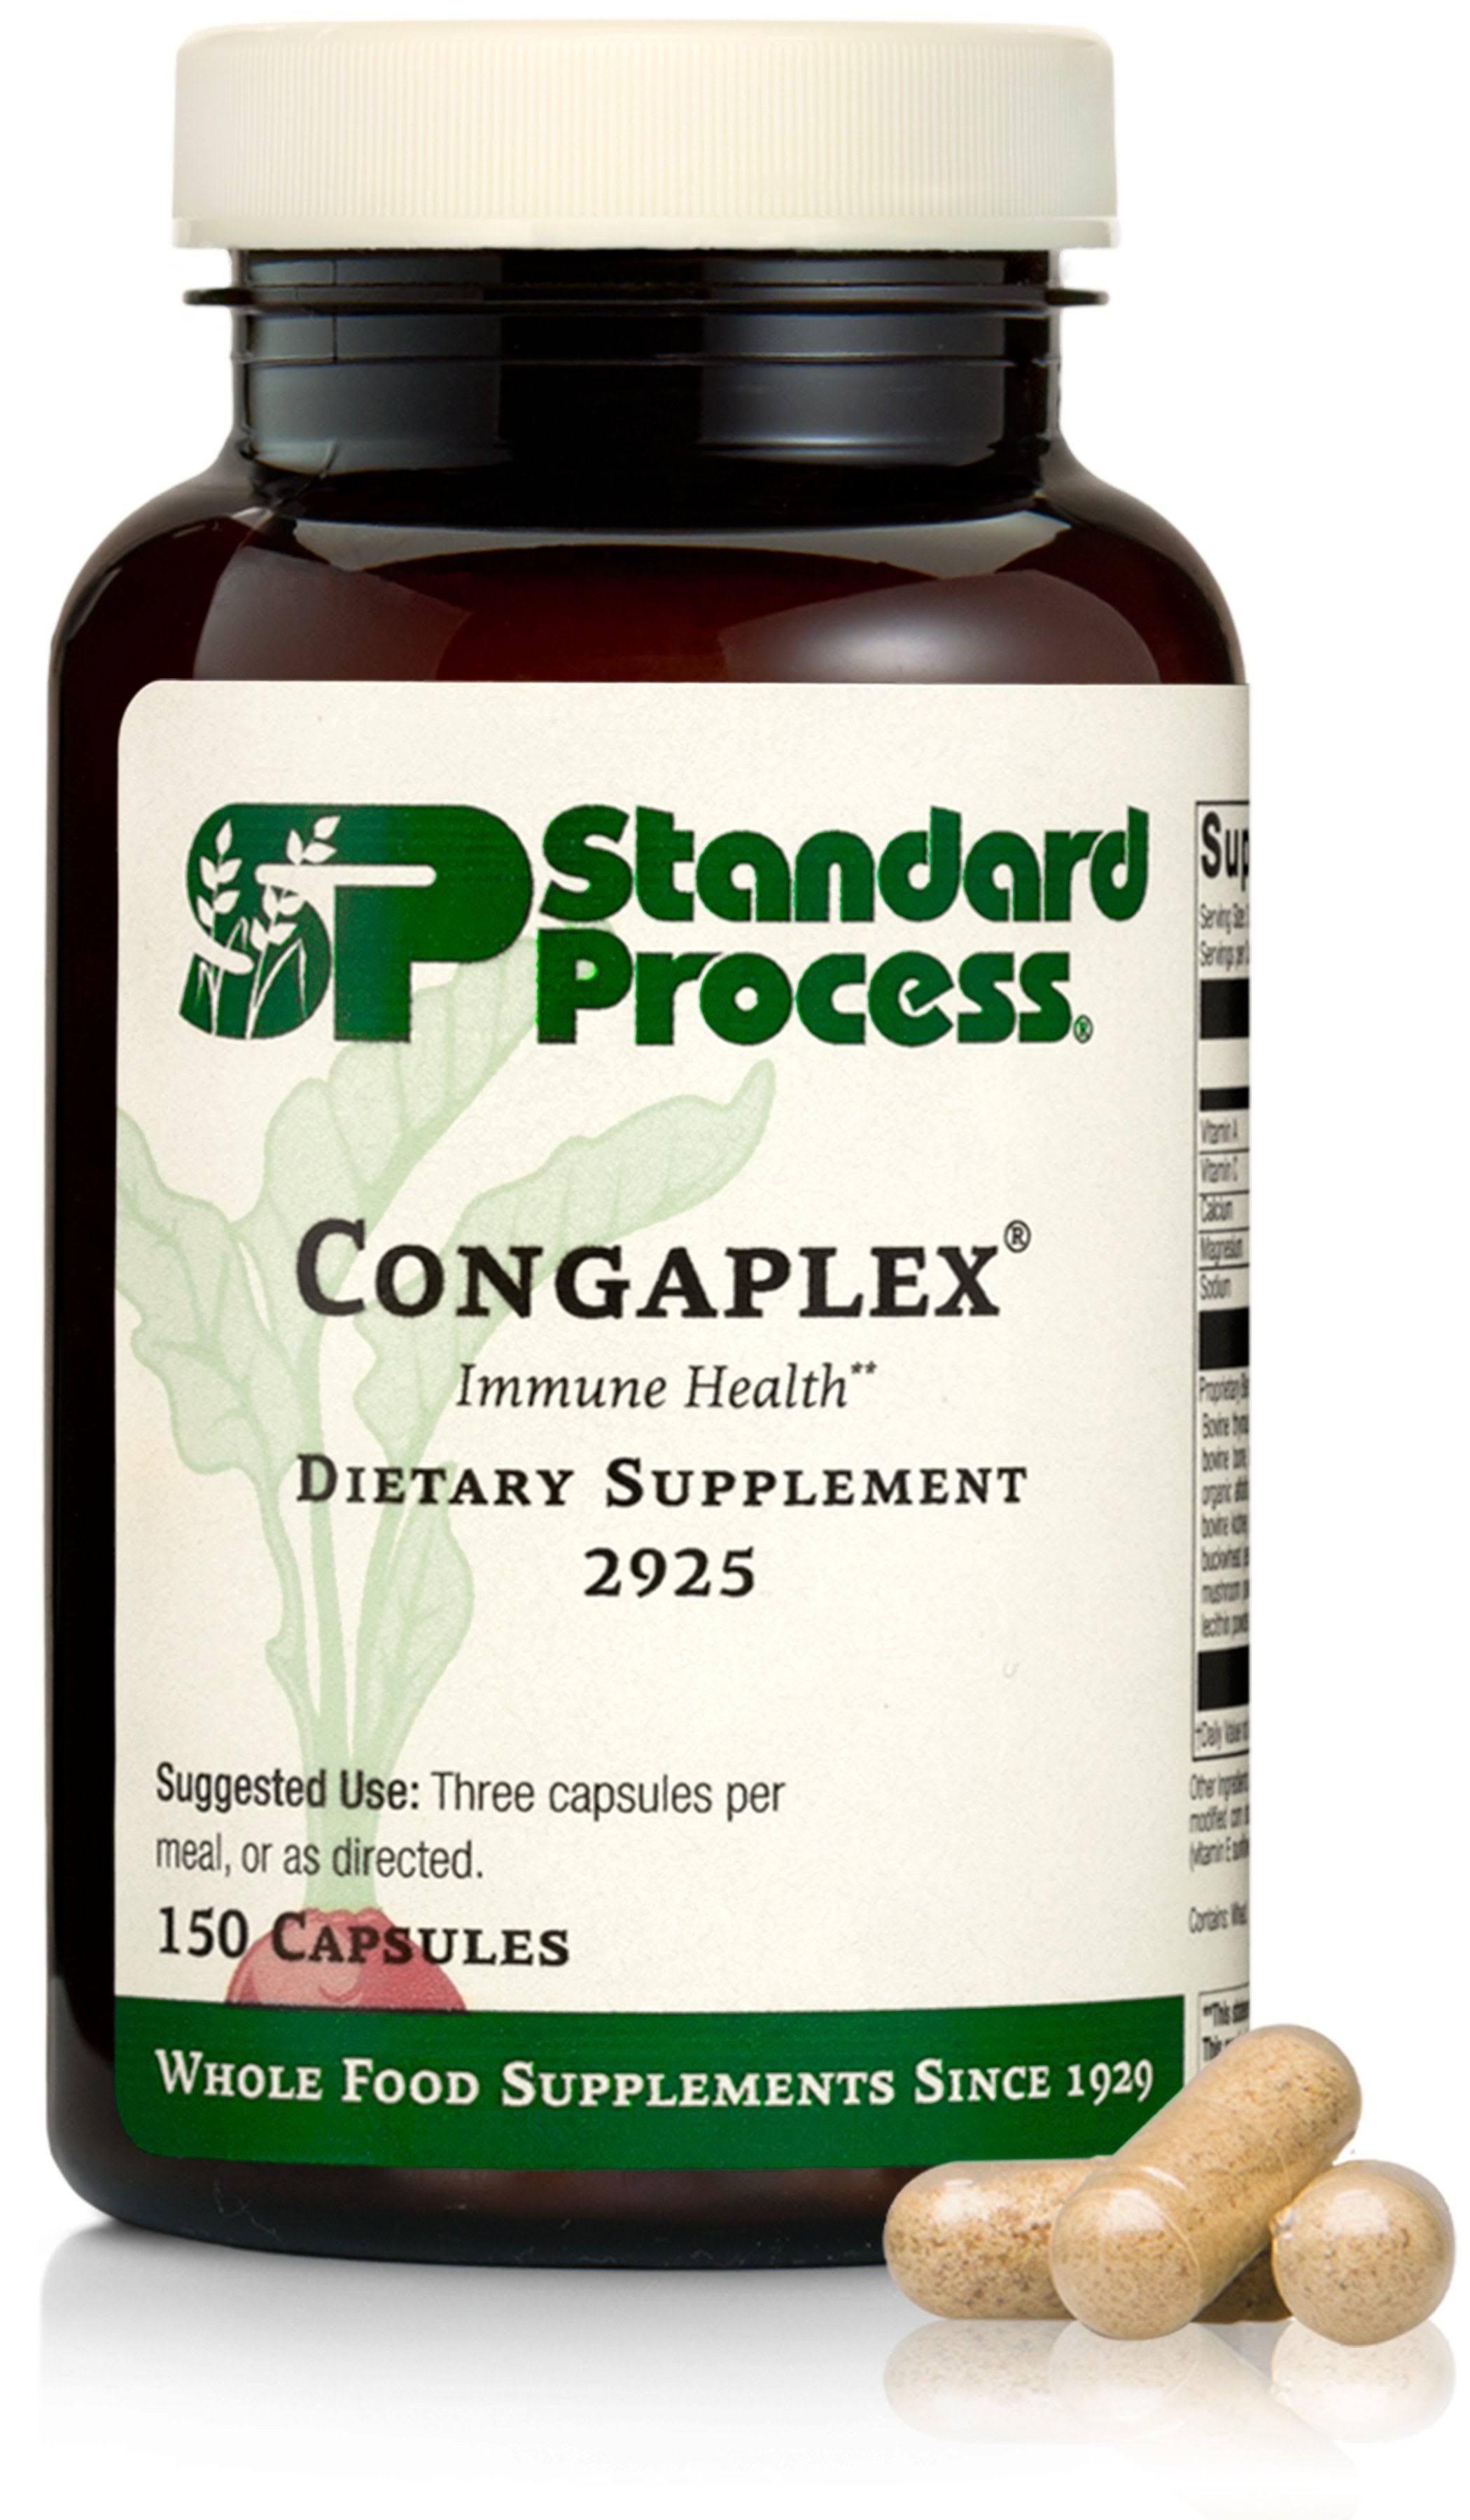 Standard Process Congaplex Dietary Supplement - 150 Capsules